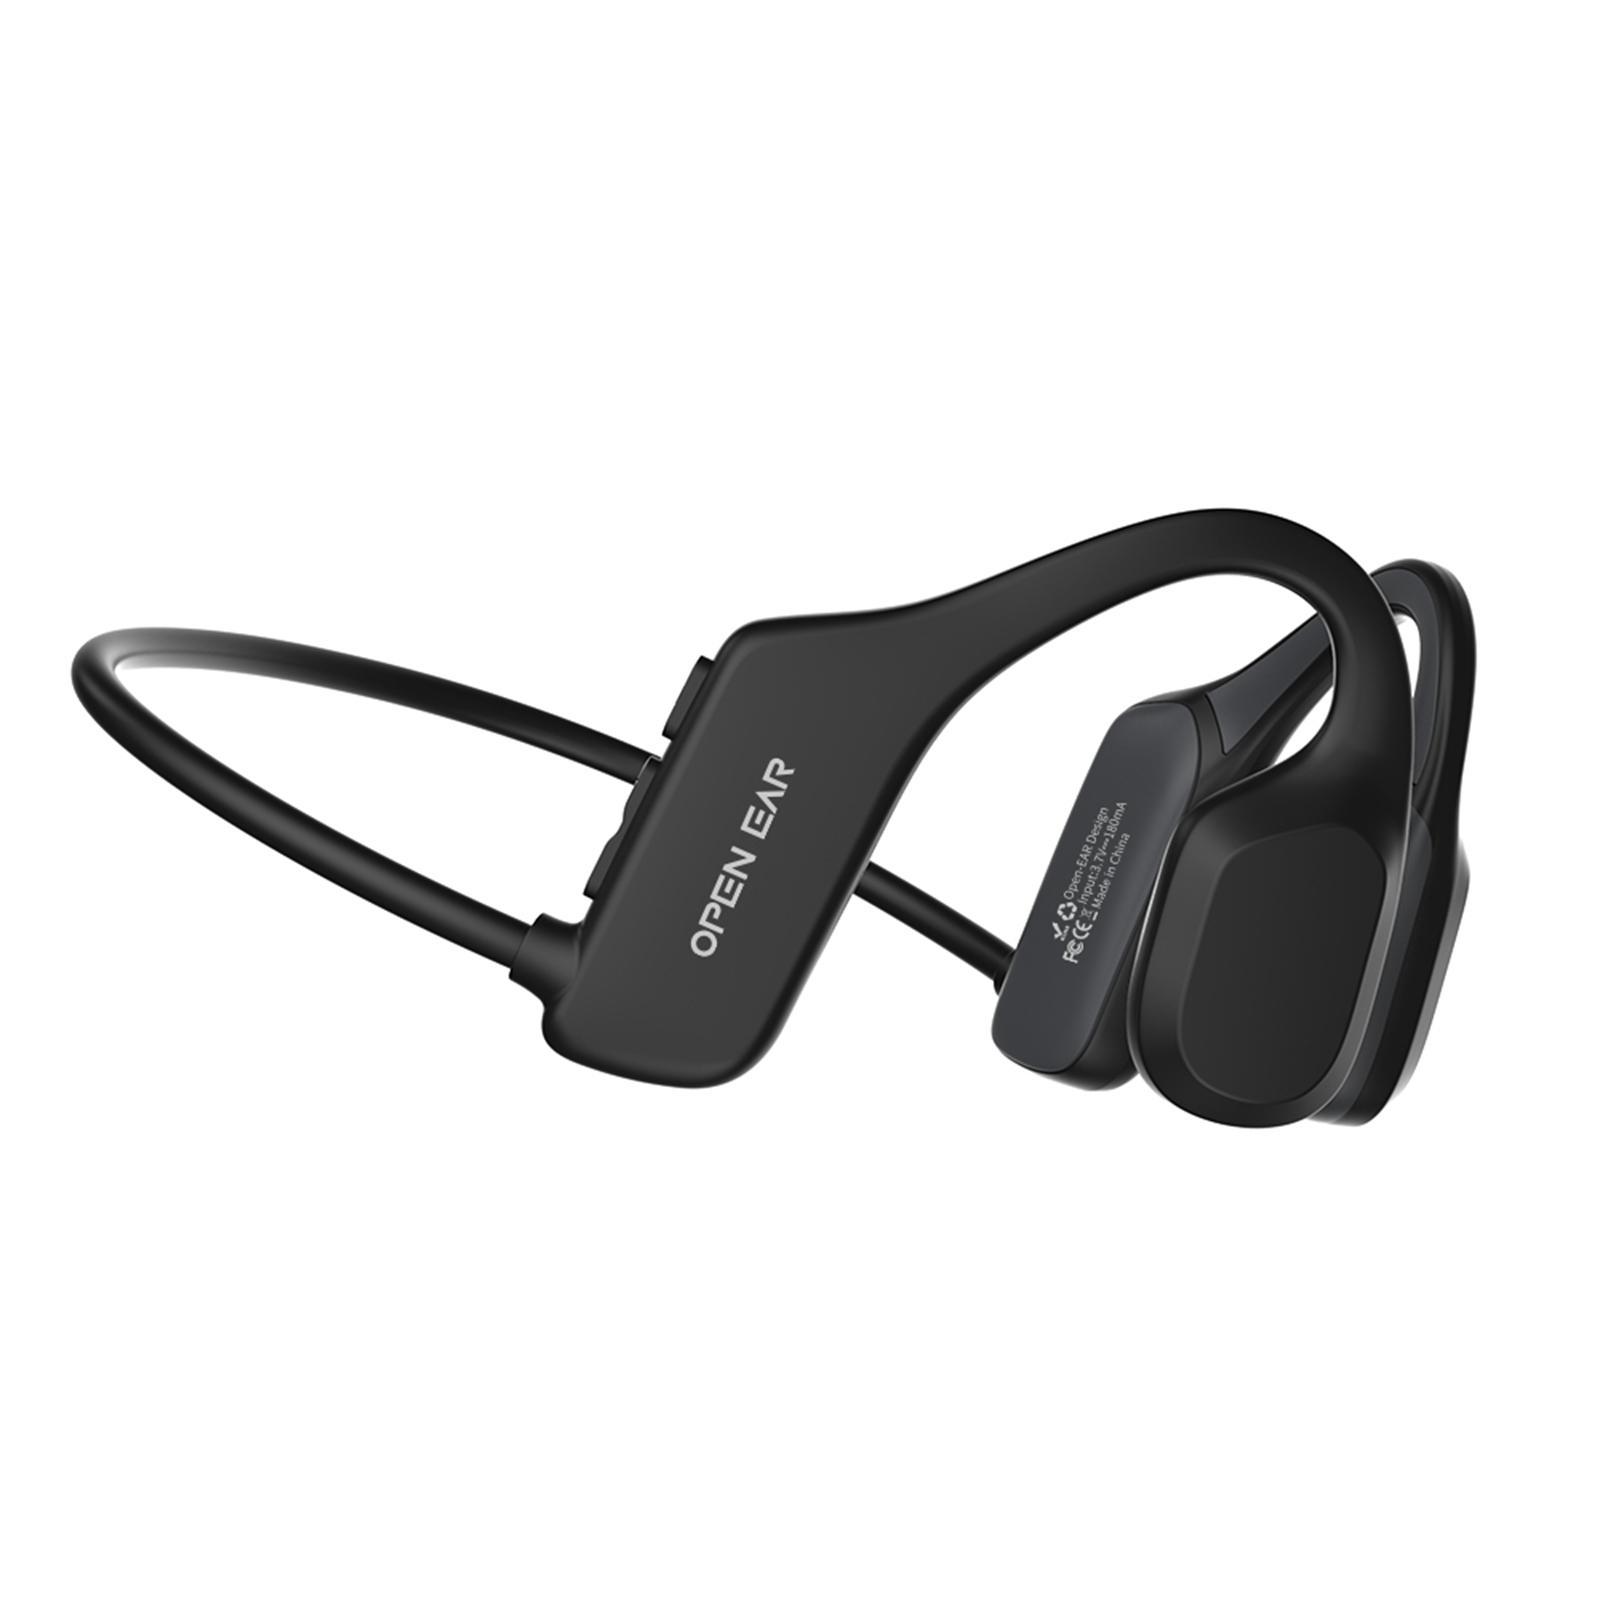 Headphone Open Ear Headphones Portable Earphone for Travel Hiking Workout